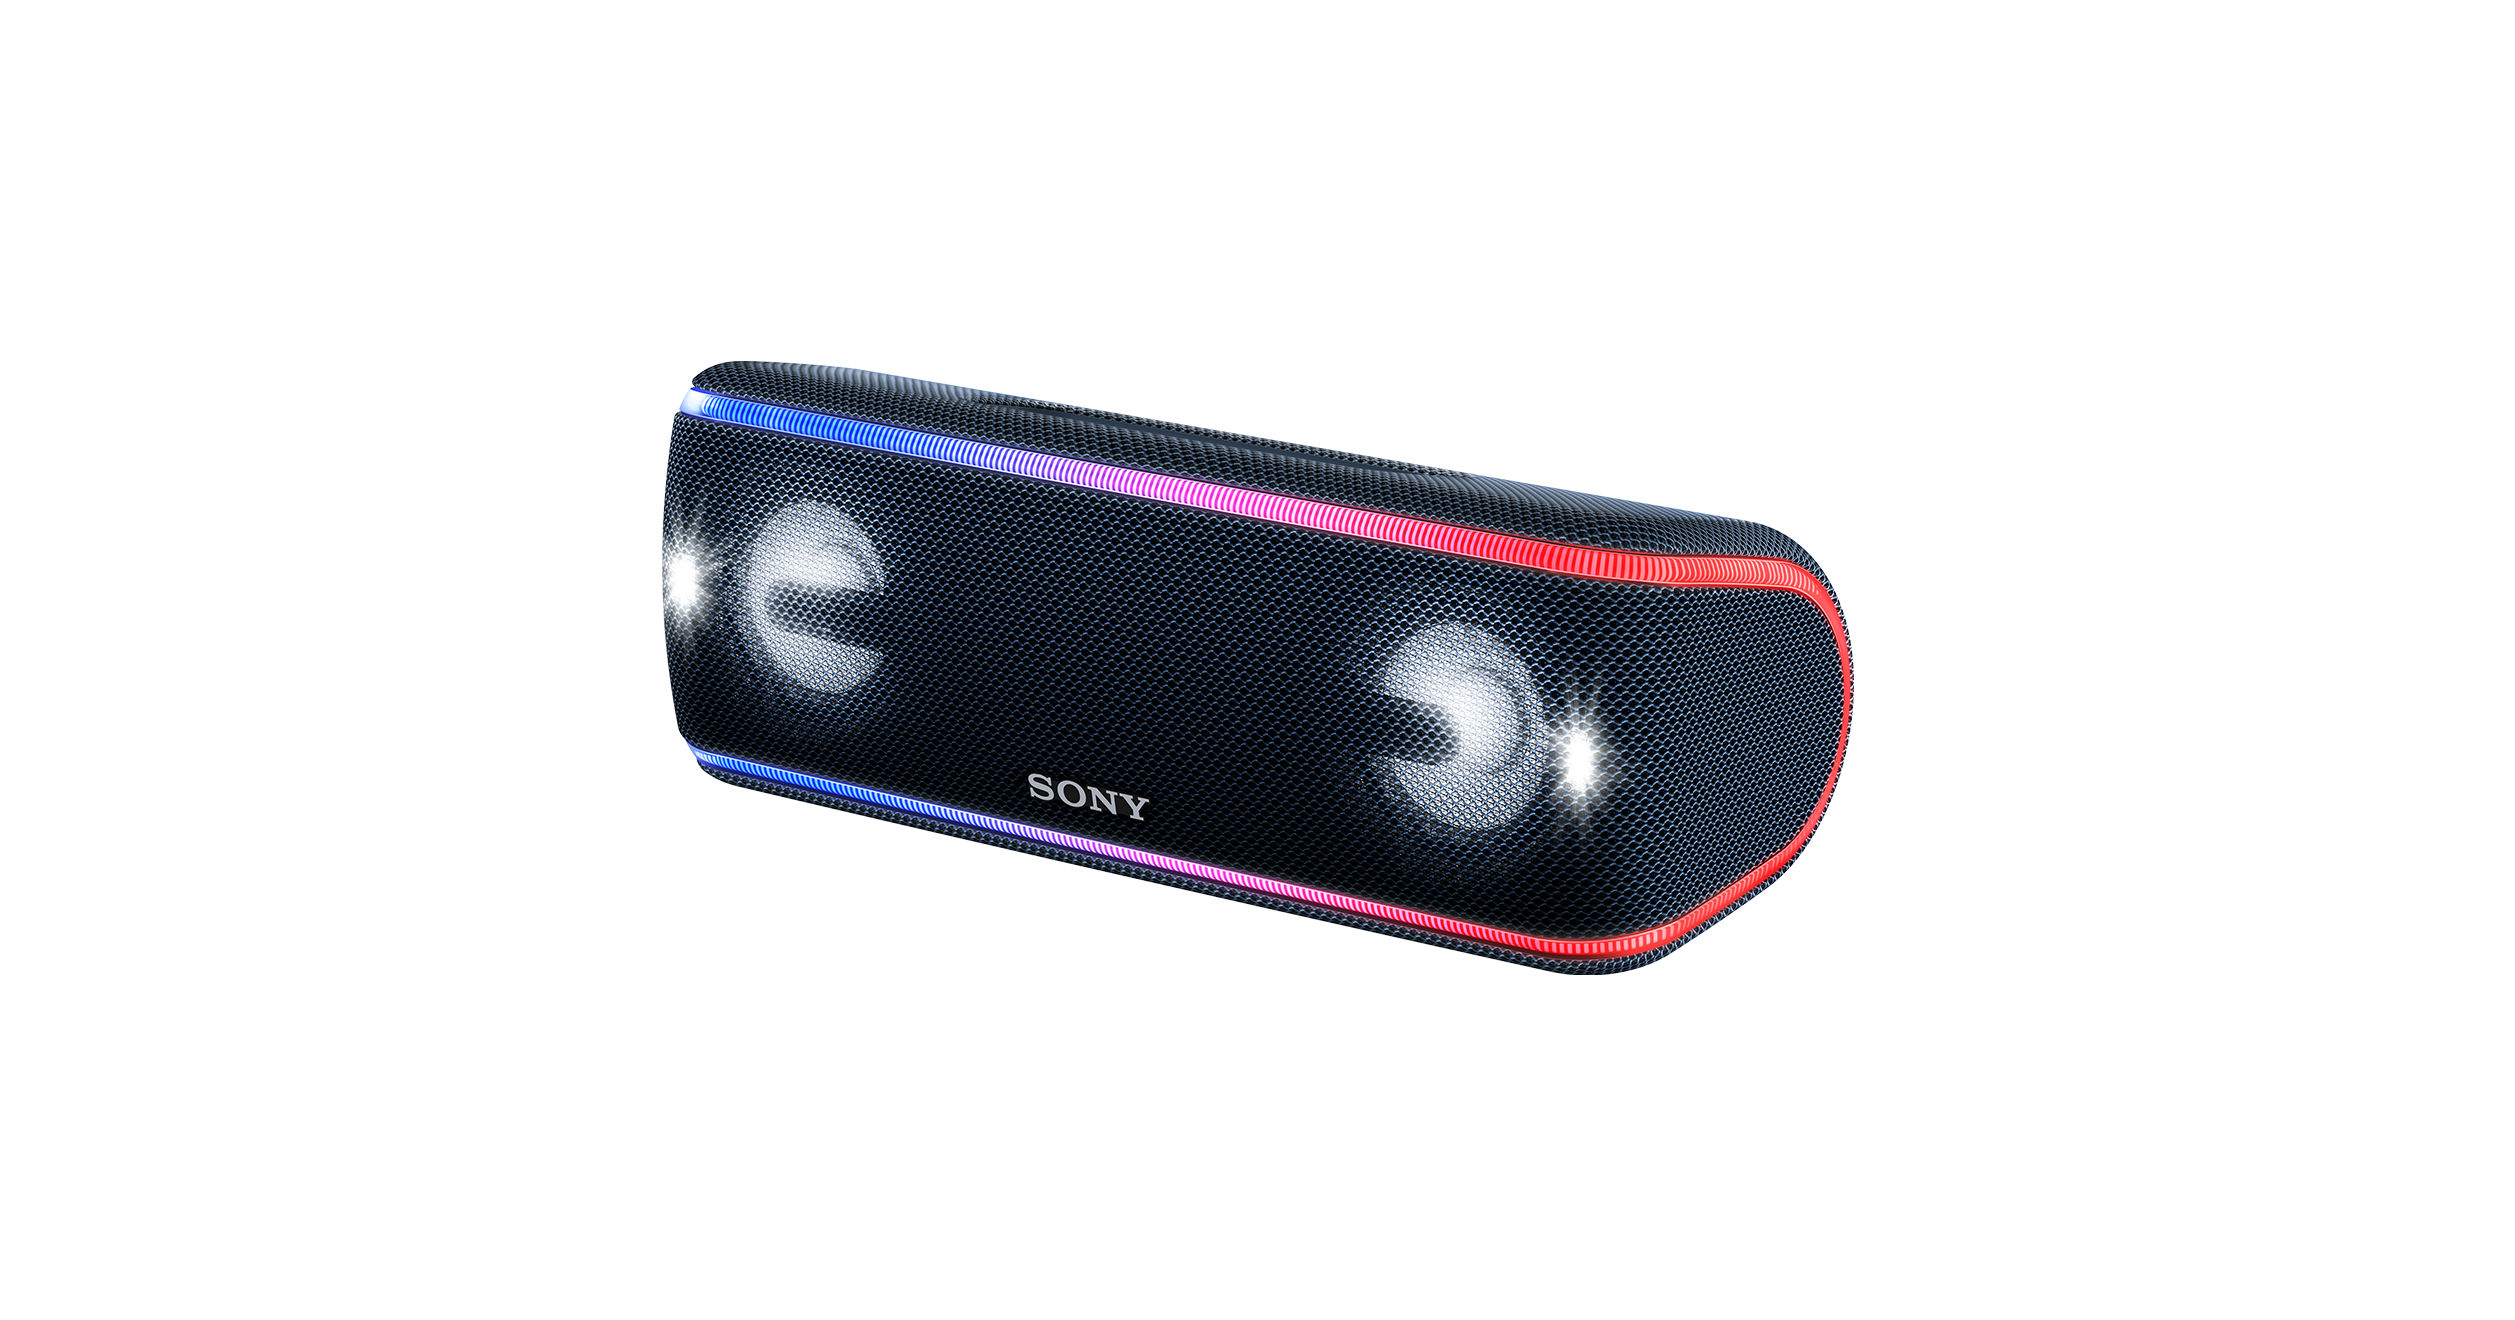 Sony speaker Sony Set To Crank Up Audio Offering Extensive Stylish New Range